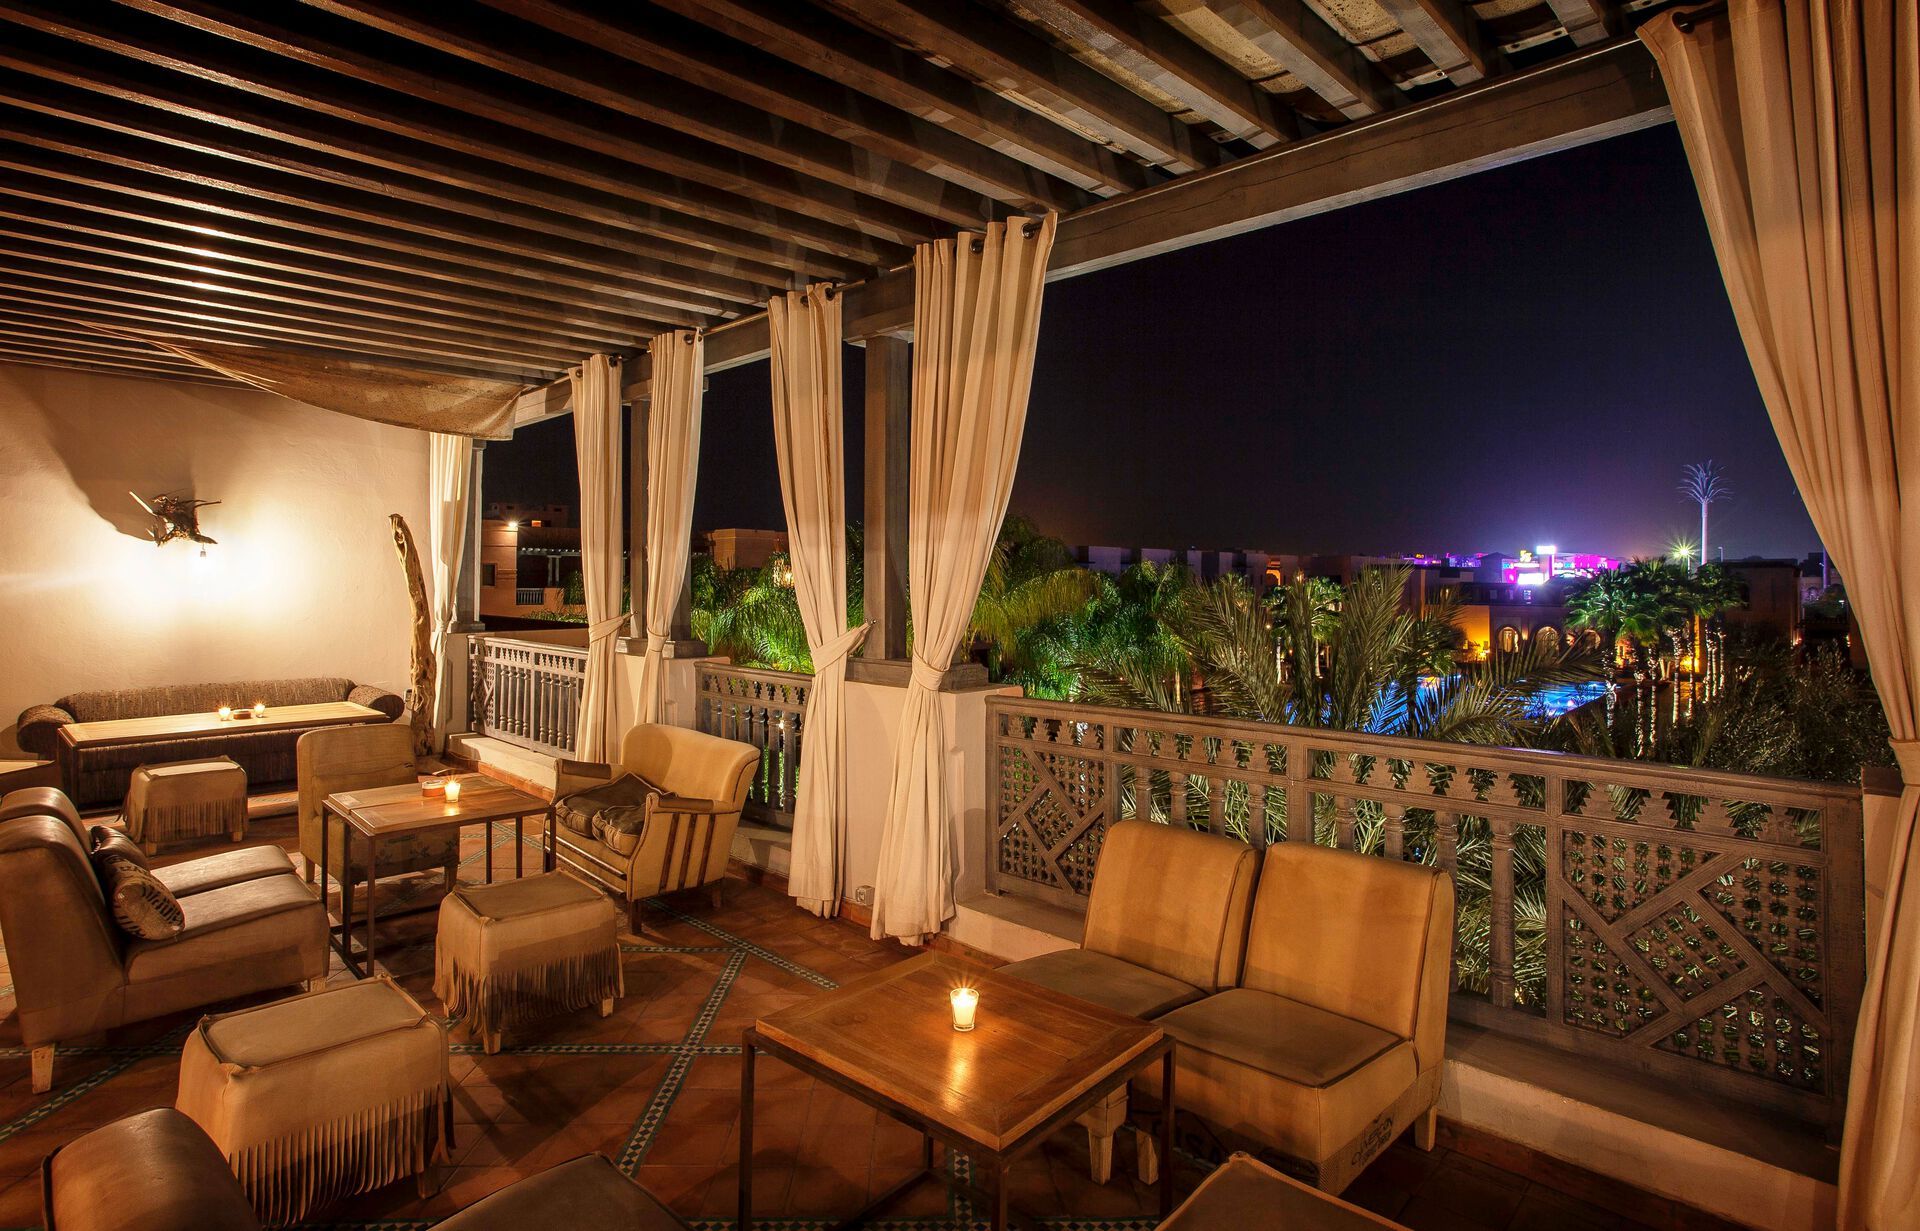 Maroc - Marrakech - Hotel Jaal Riad Resort 5* - Adult Only